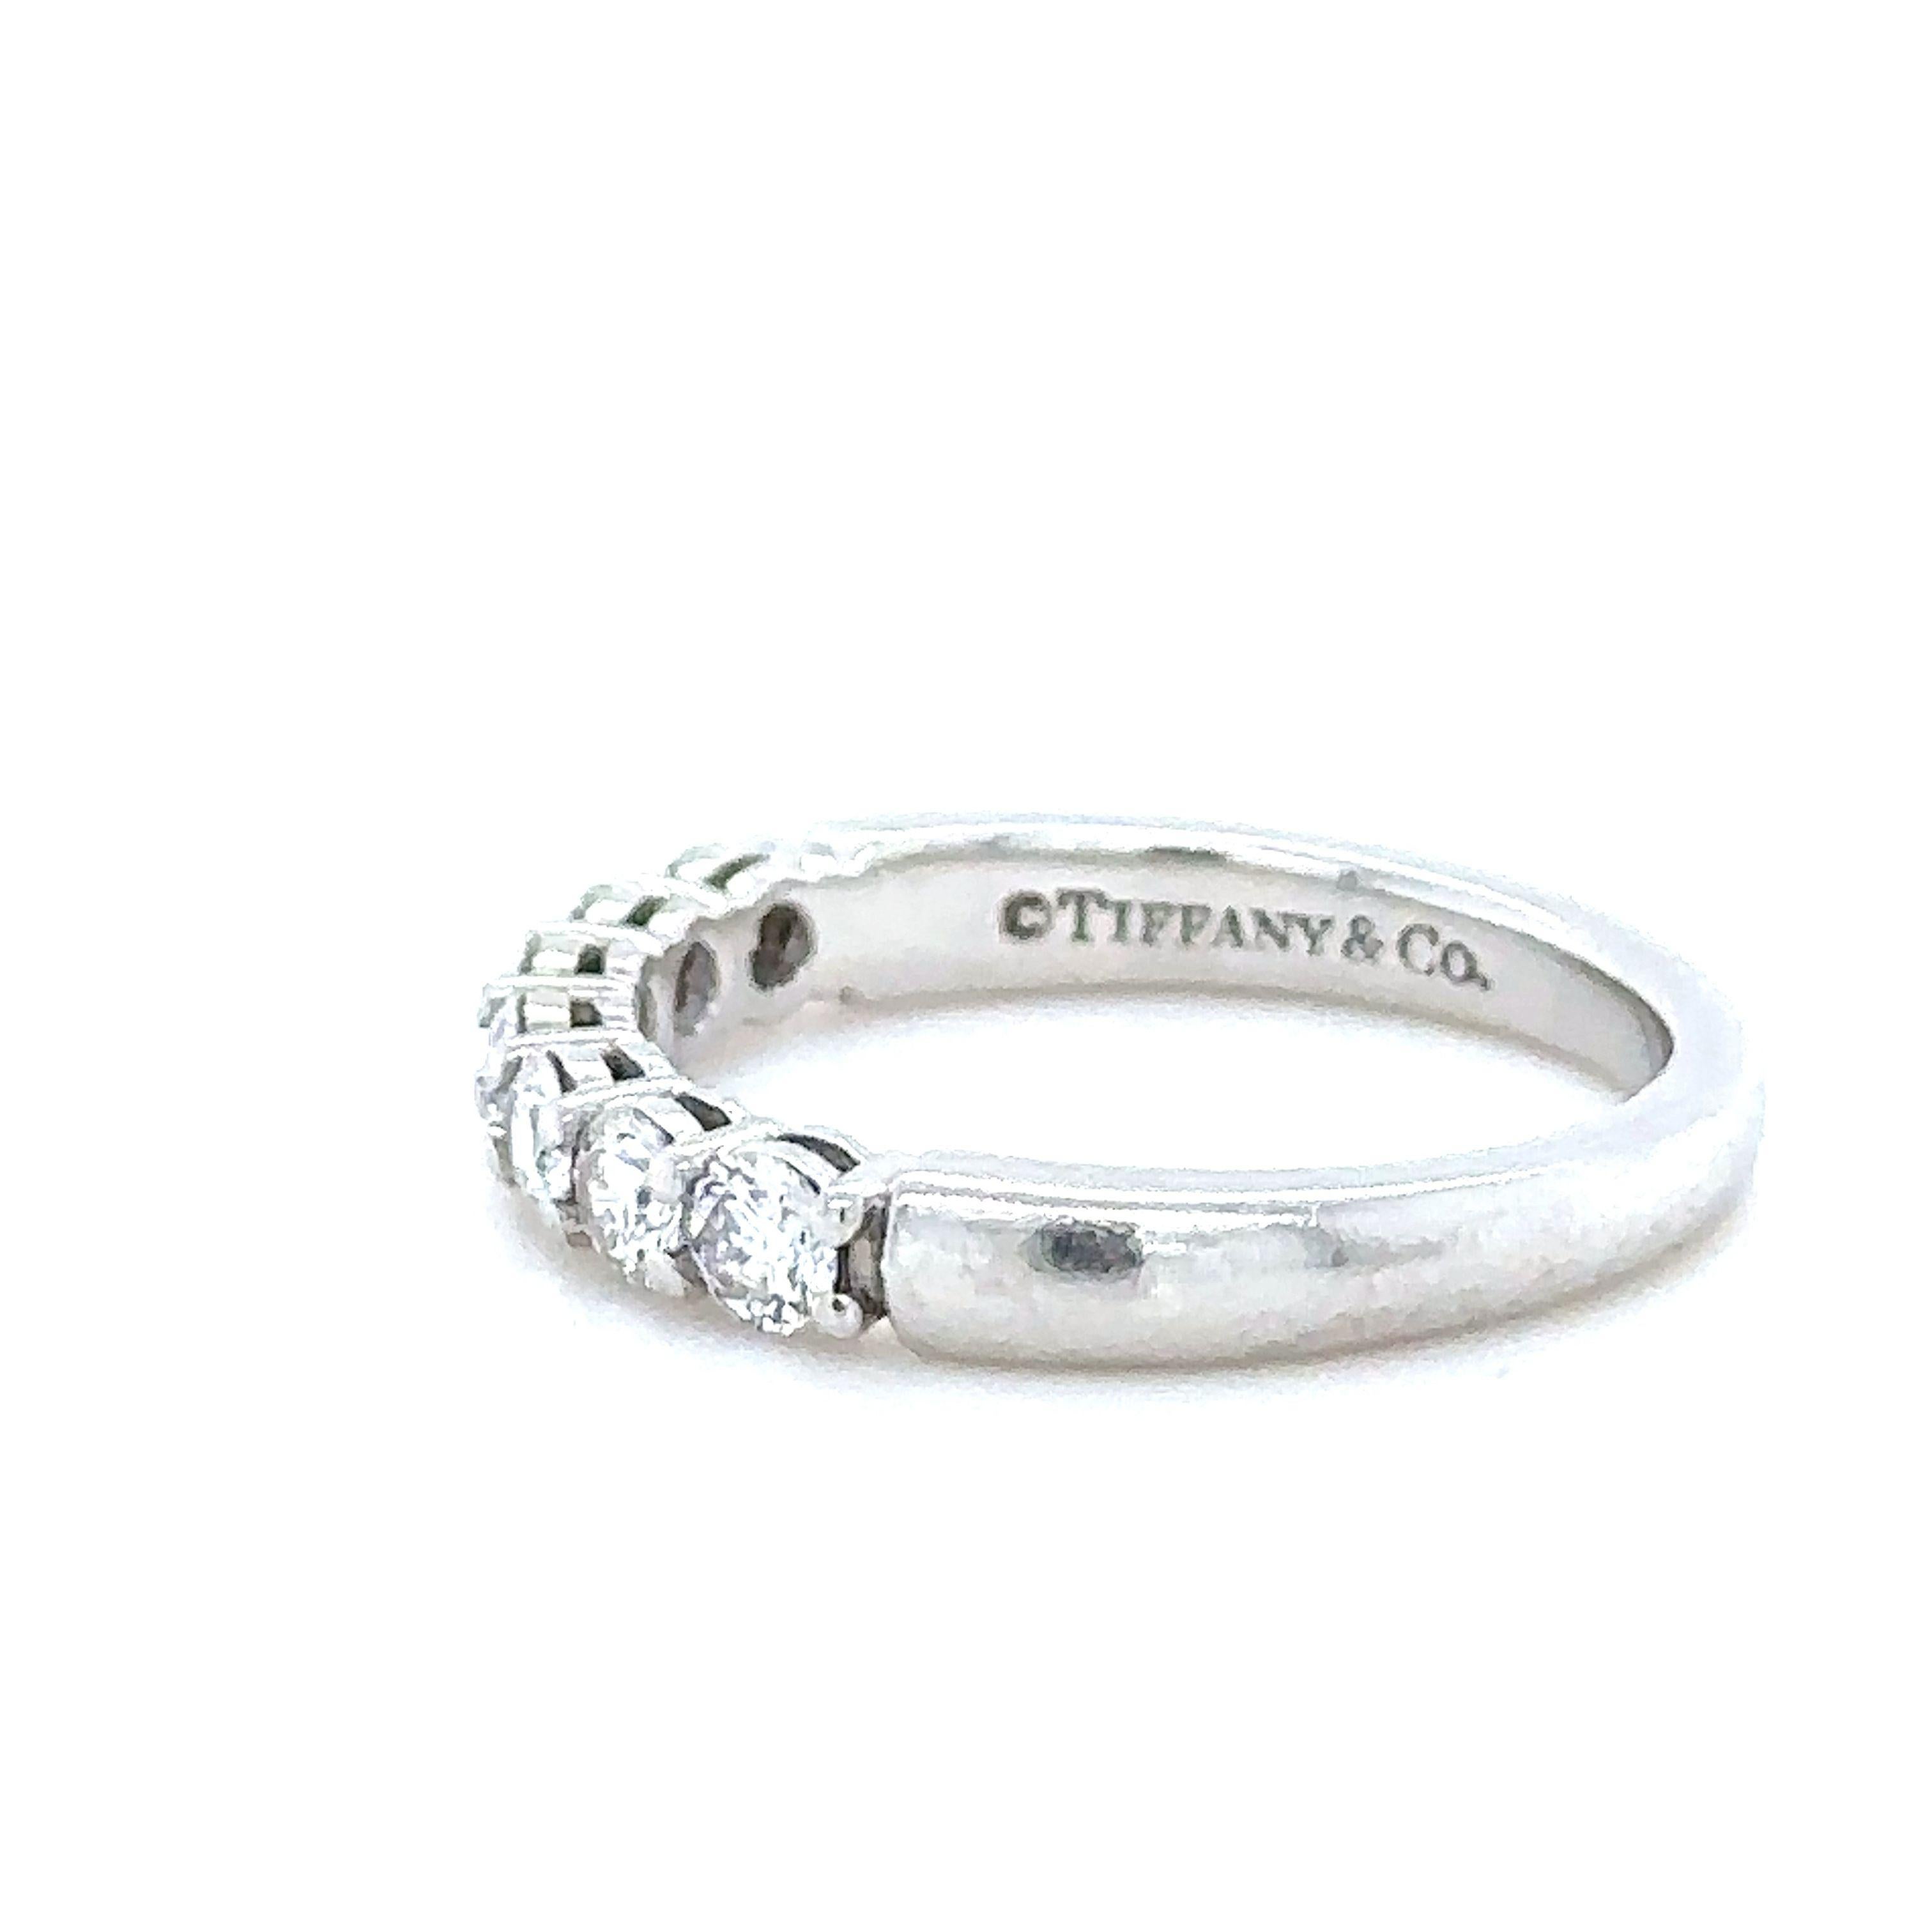 tiffany & co eternity ring